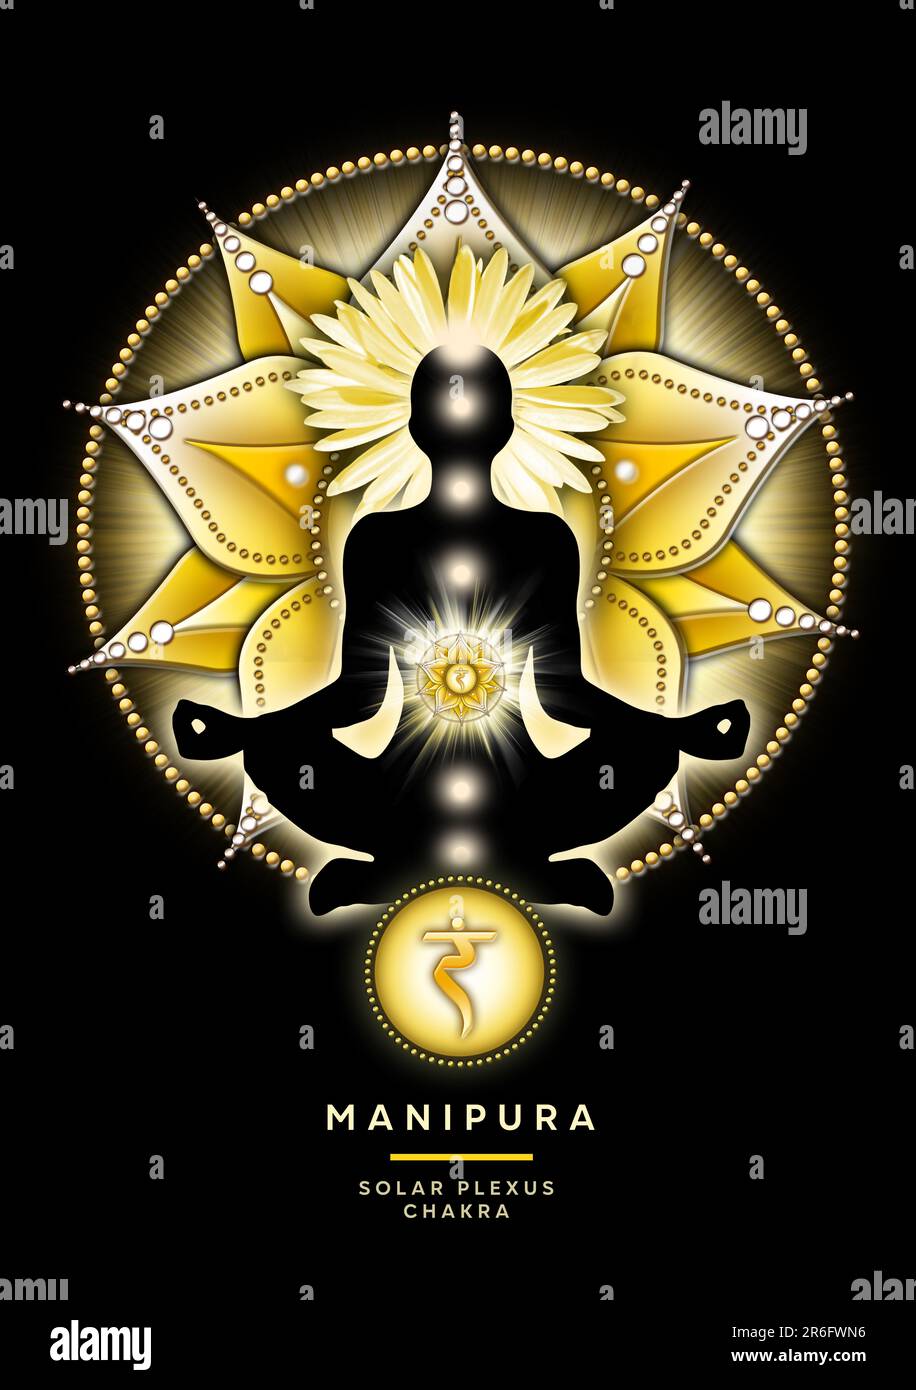 Solar plexus chakra meditation in yoga lotus pose, in front of Manipura chakra symbol. Peaceful decor for meditation and chakra energy healing. Stock Photo